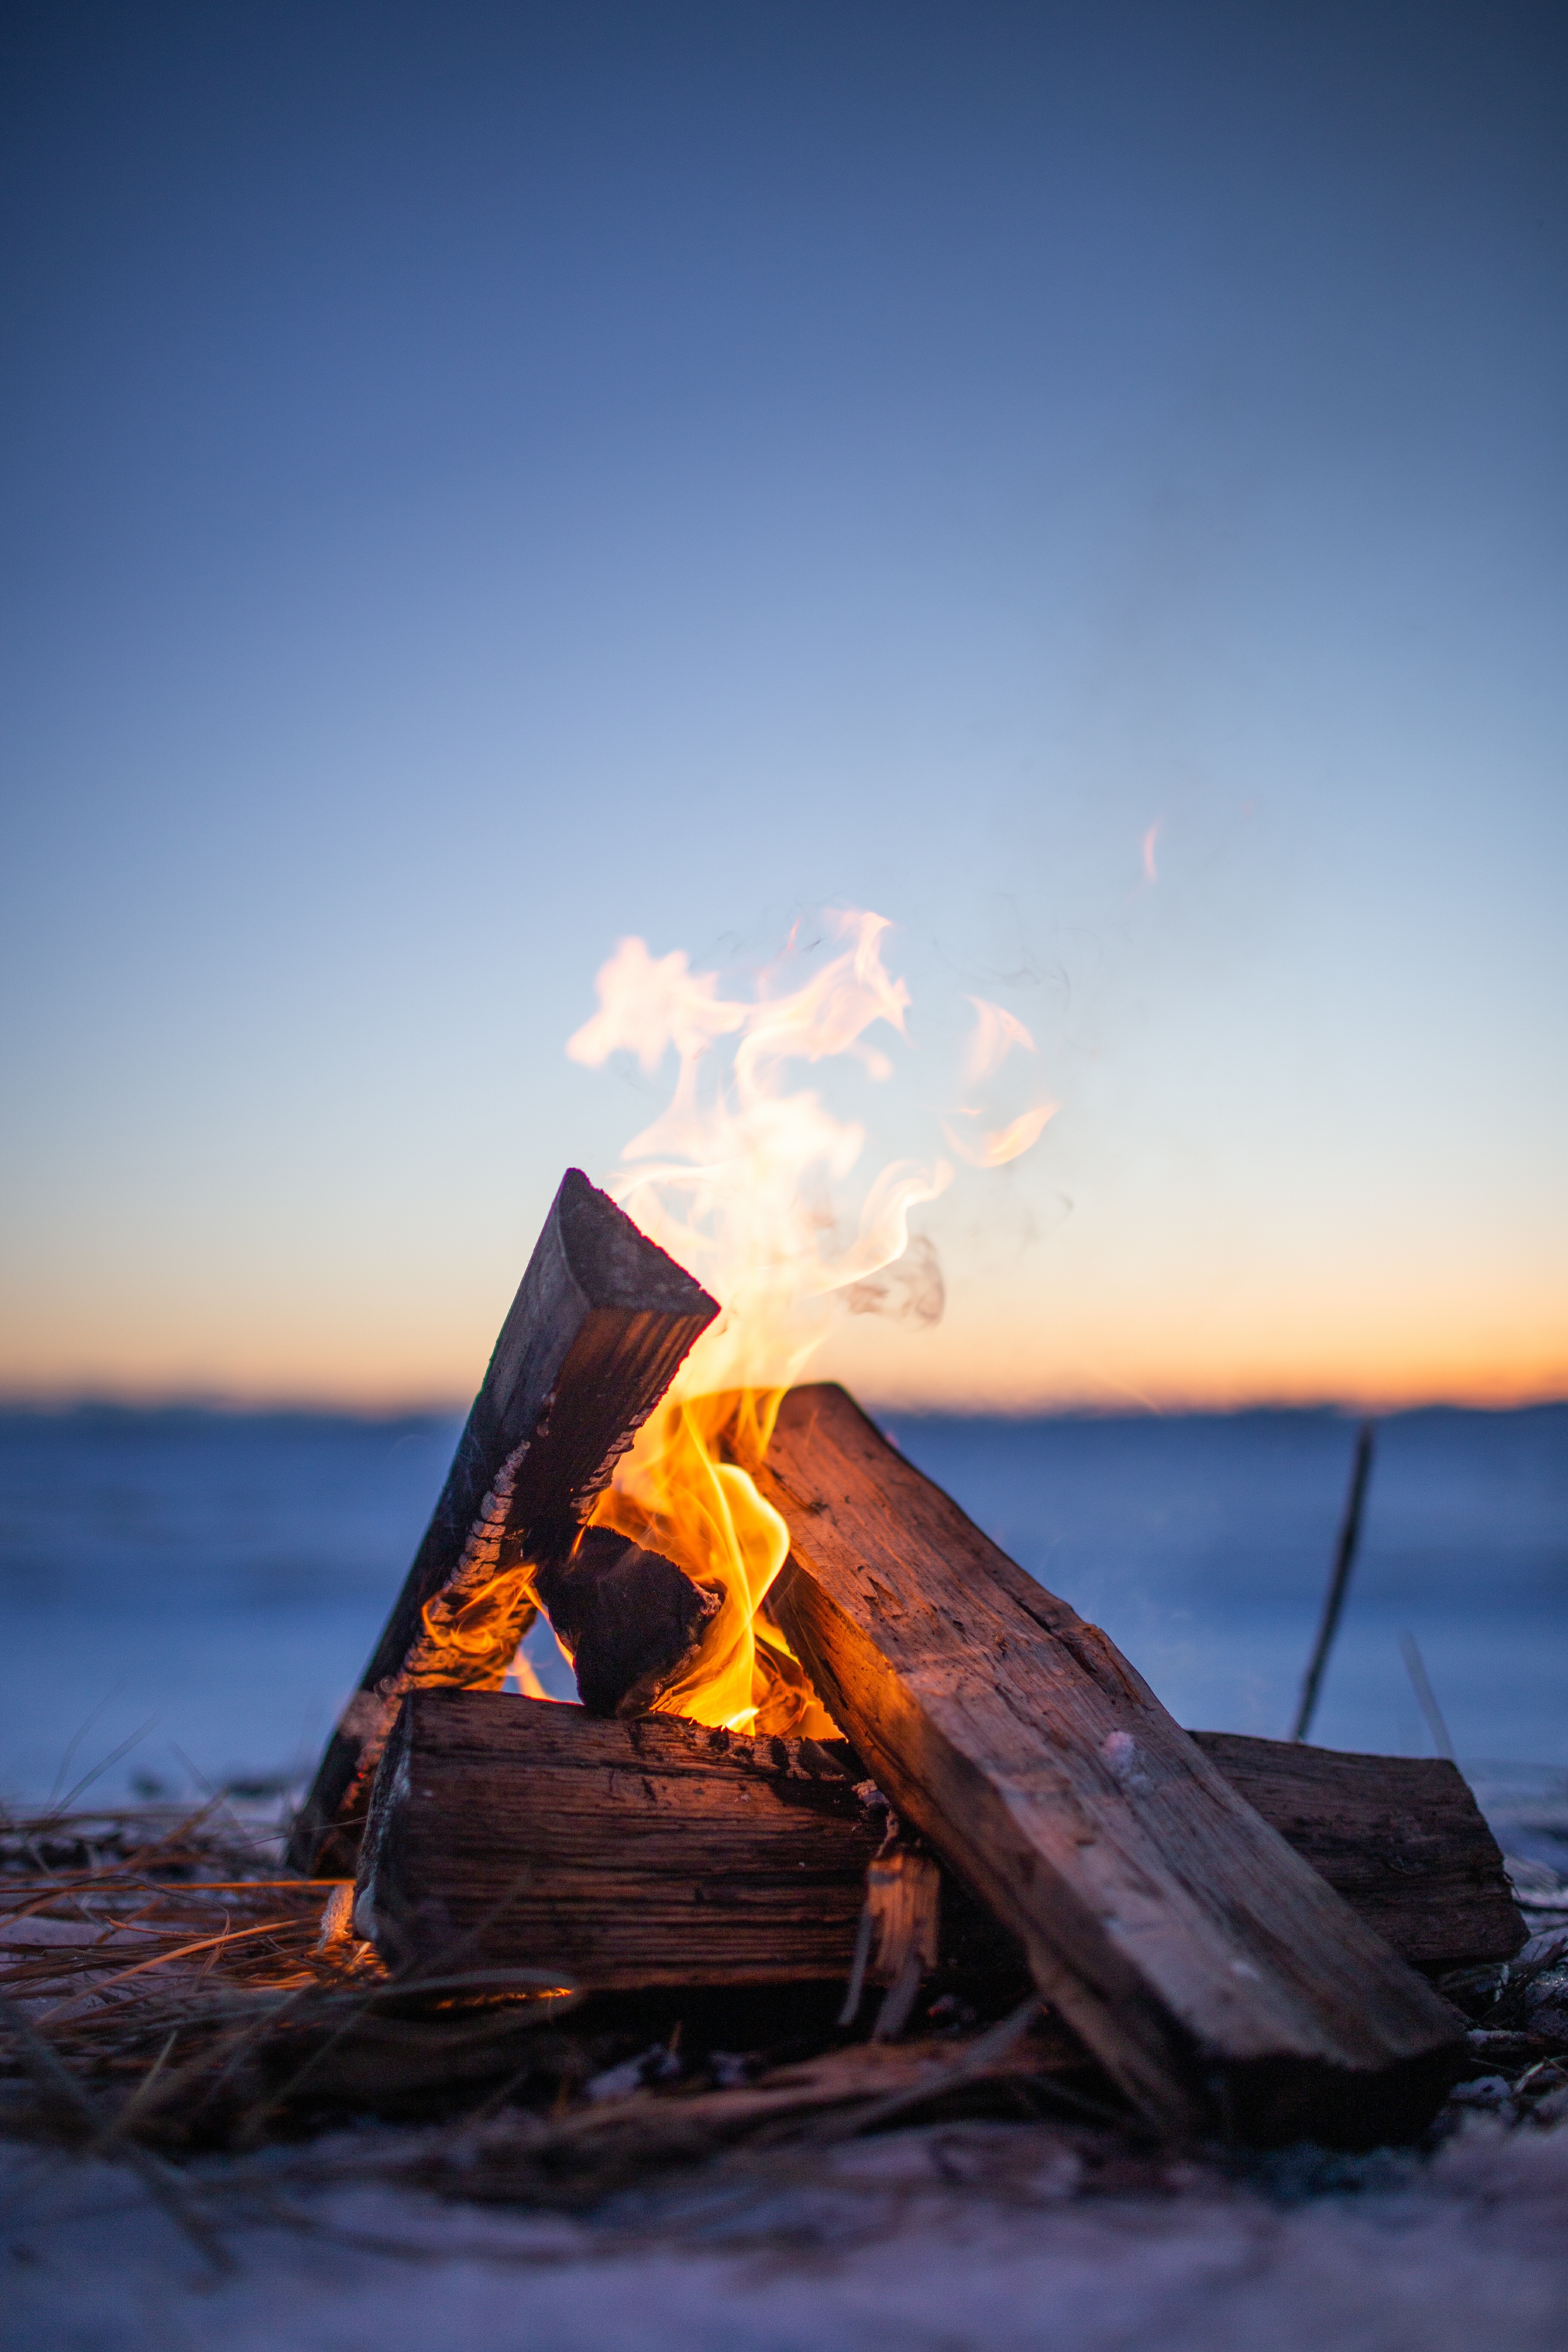 bonfire, firewood, campsite, camping, flame, fire, miscellanea, miscellaneous, evening